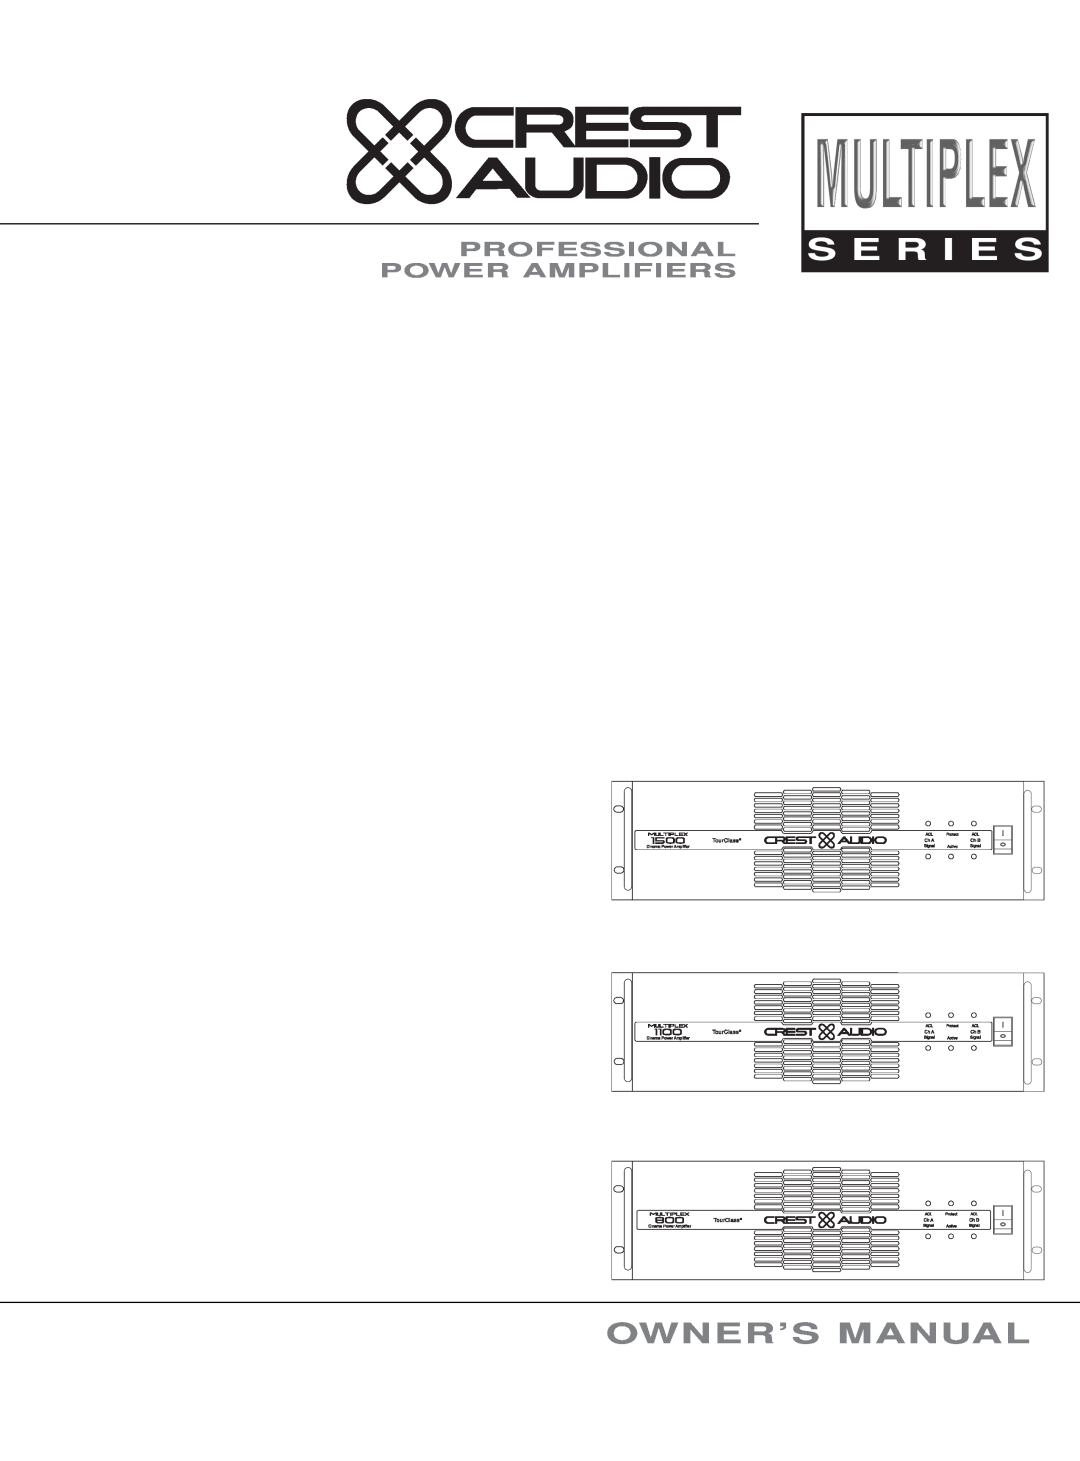 Peavey Multiplex Series owner manual Professional Power Amplifiers 